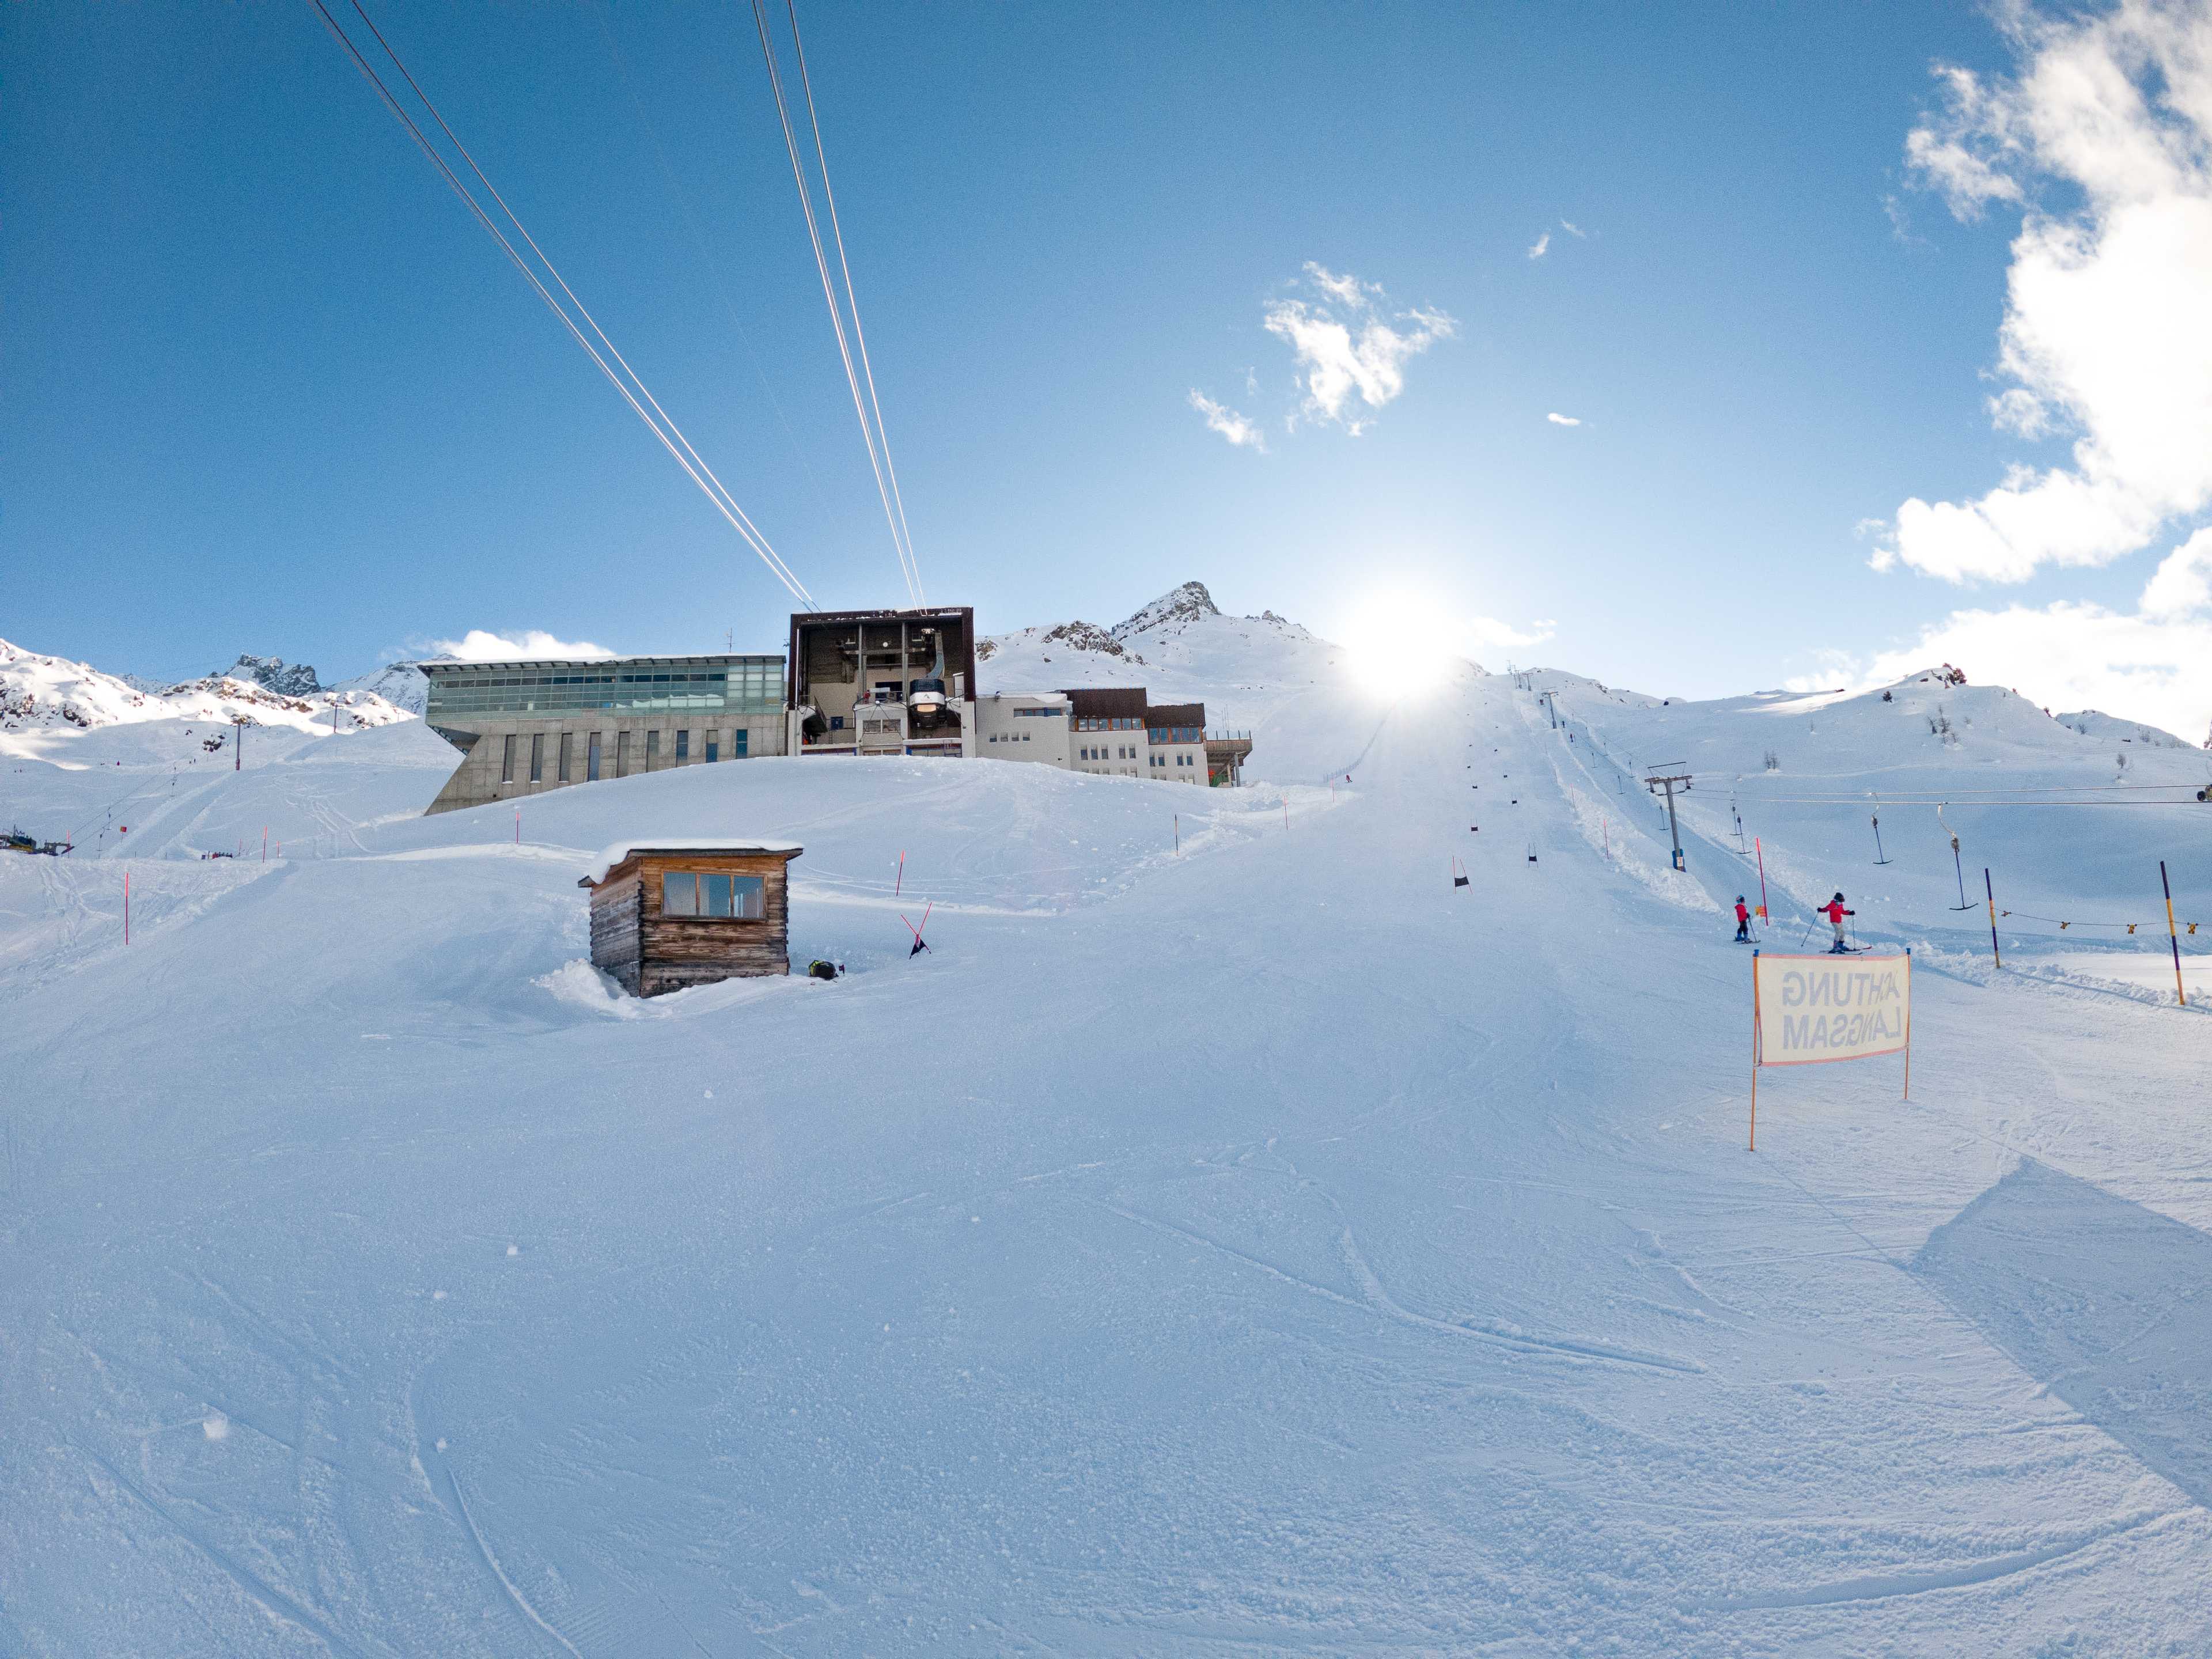 Furtschellas cable car mountain station (2312 m n.p.m.), Corvatsch, St. Moritz